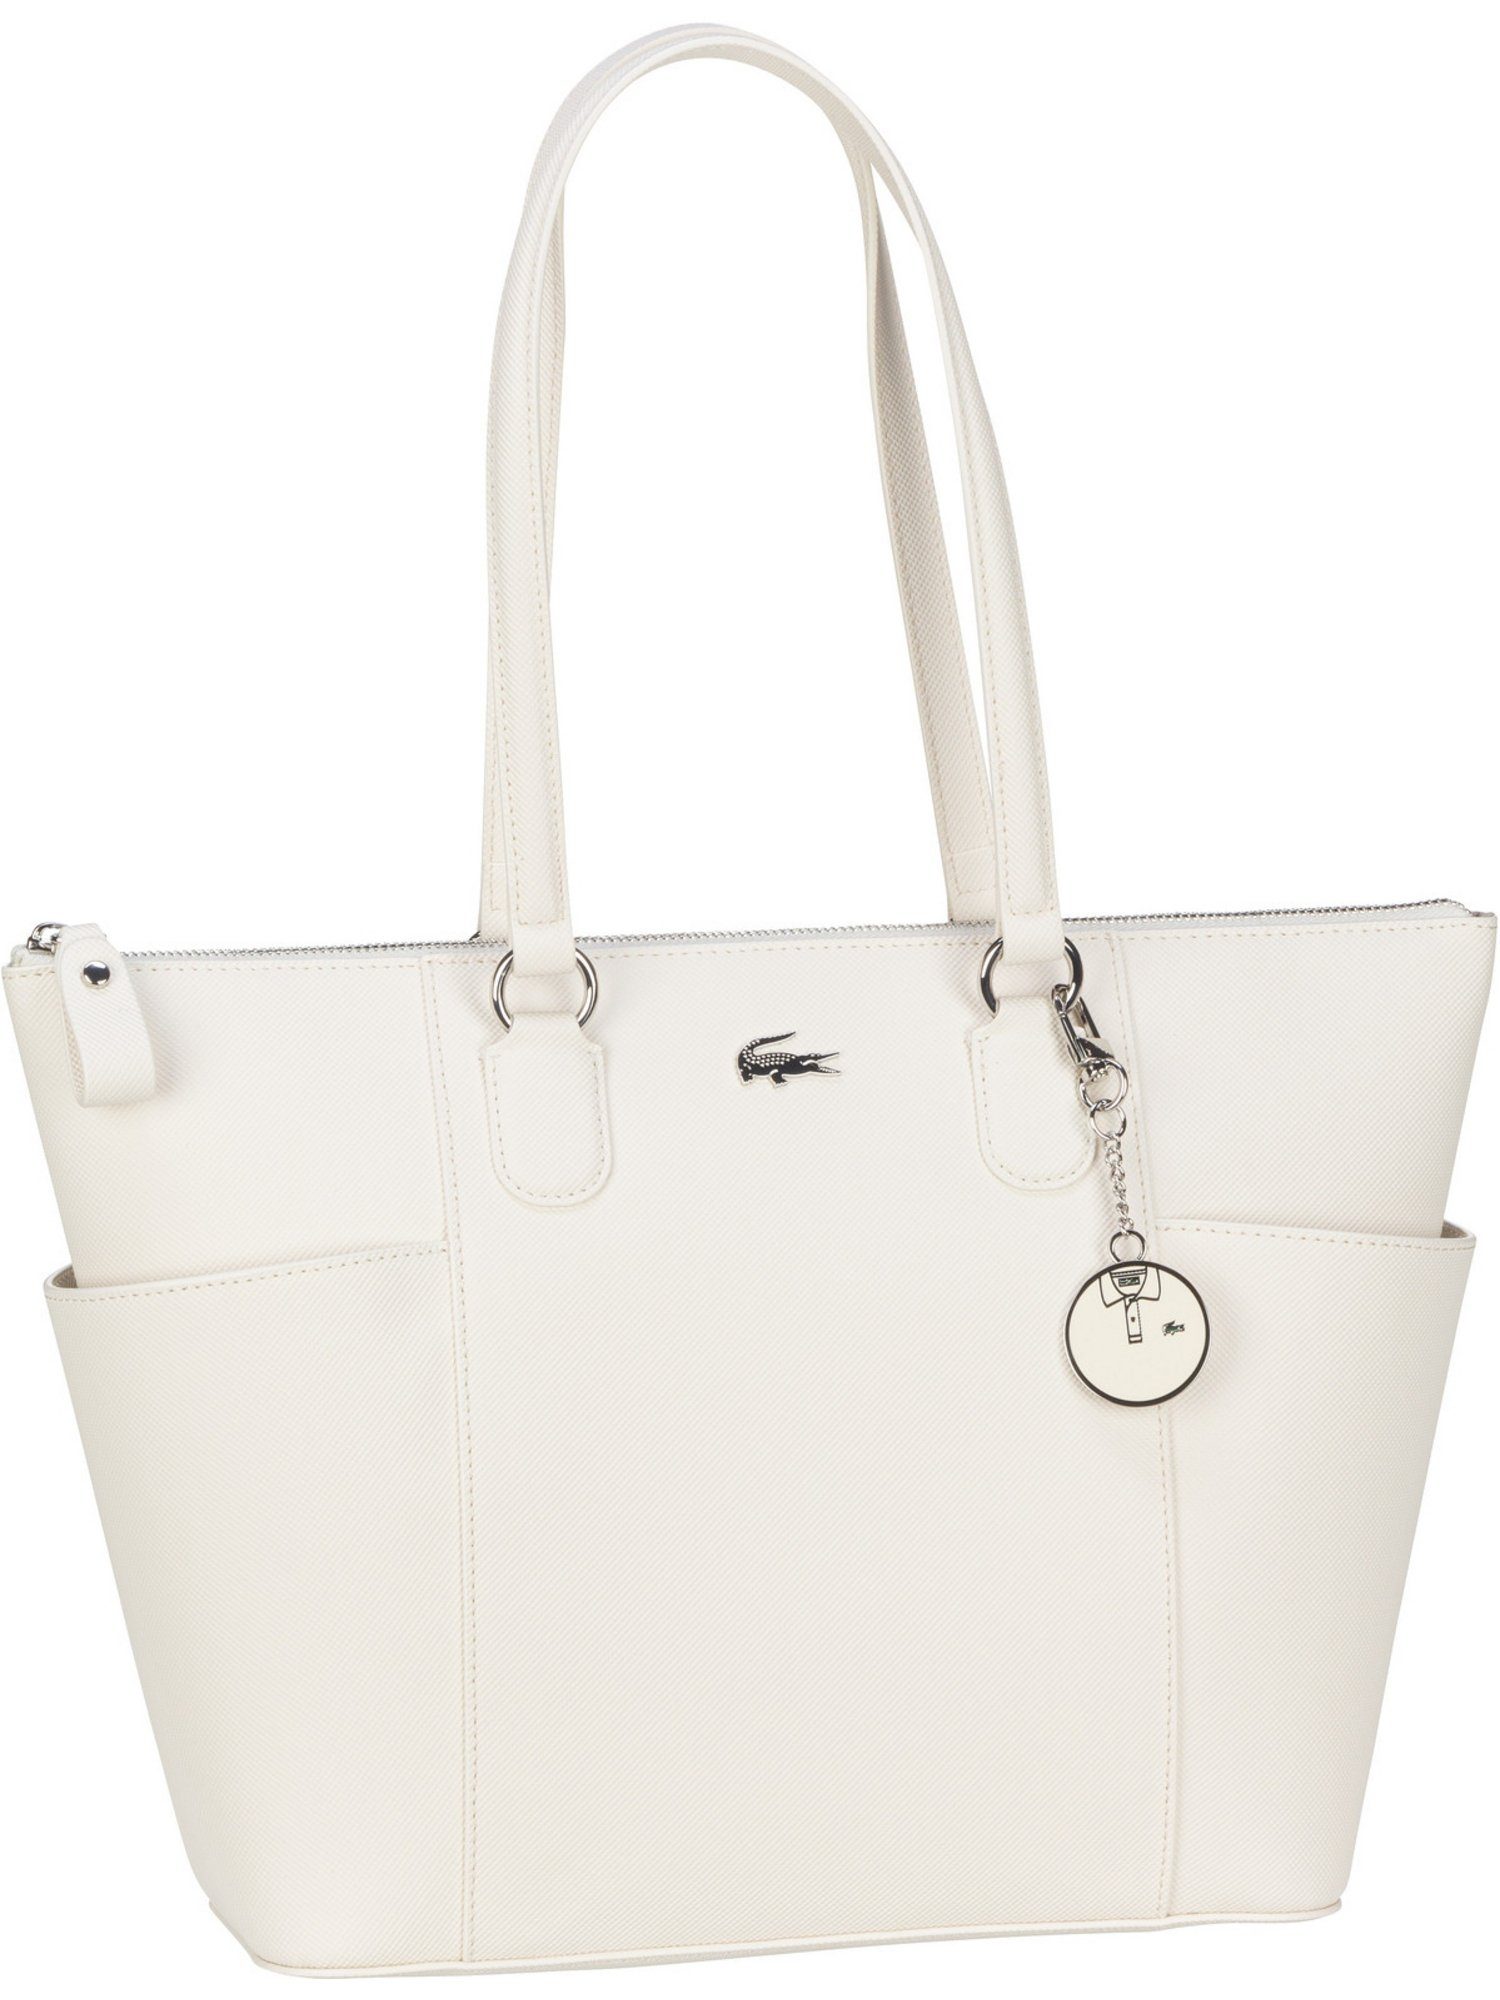 Lacoste Handtasche »Daily Classic Shopping Bag 3421«, Shopper online kaufen  | OTTO